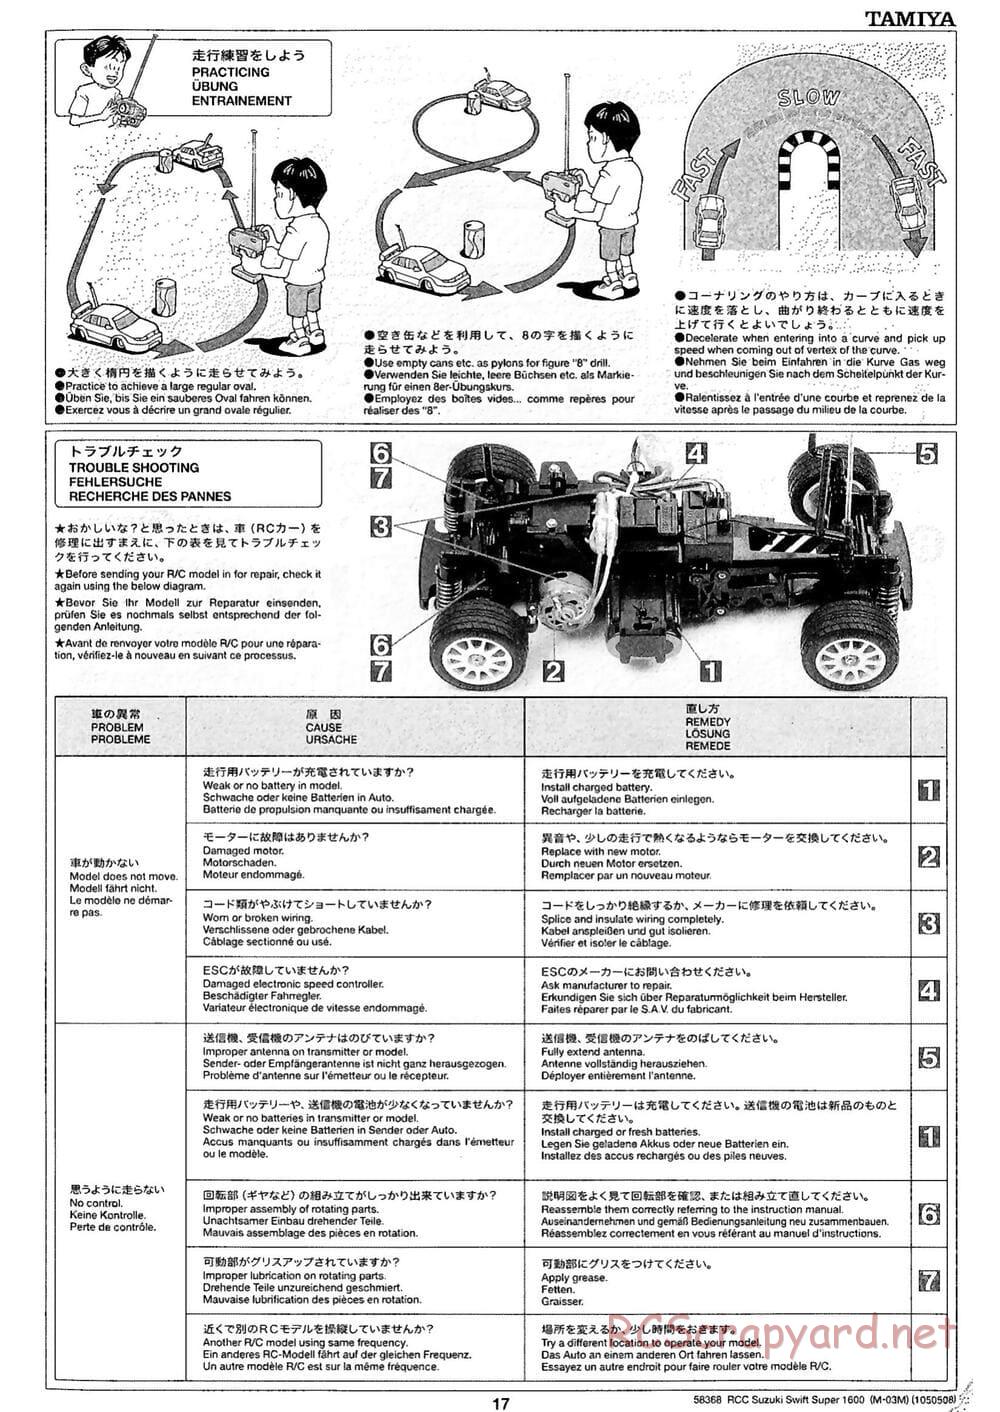 Tamiya - Suzuki Swift Super 1600 - M03M Chassis - Manual - Page 17